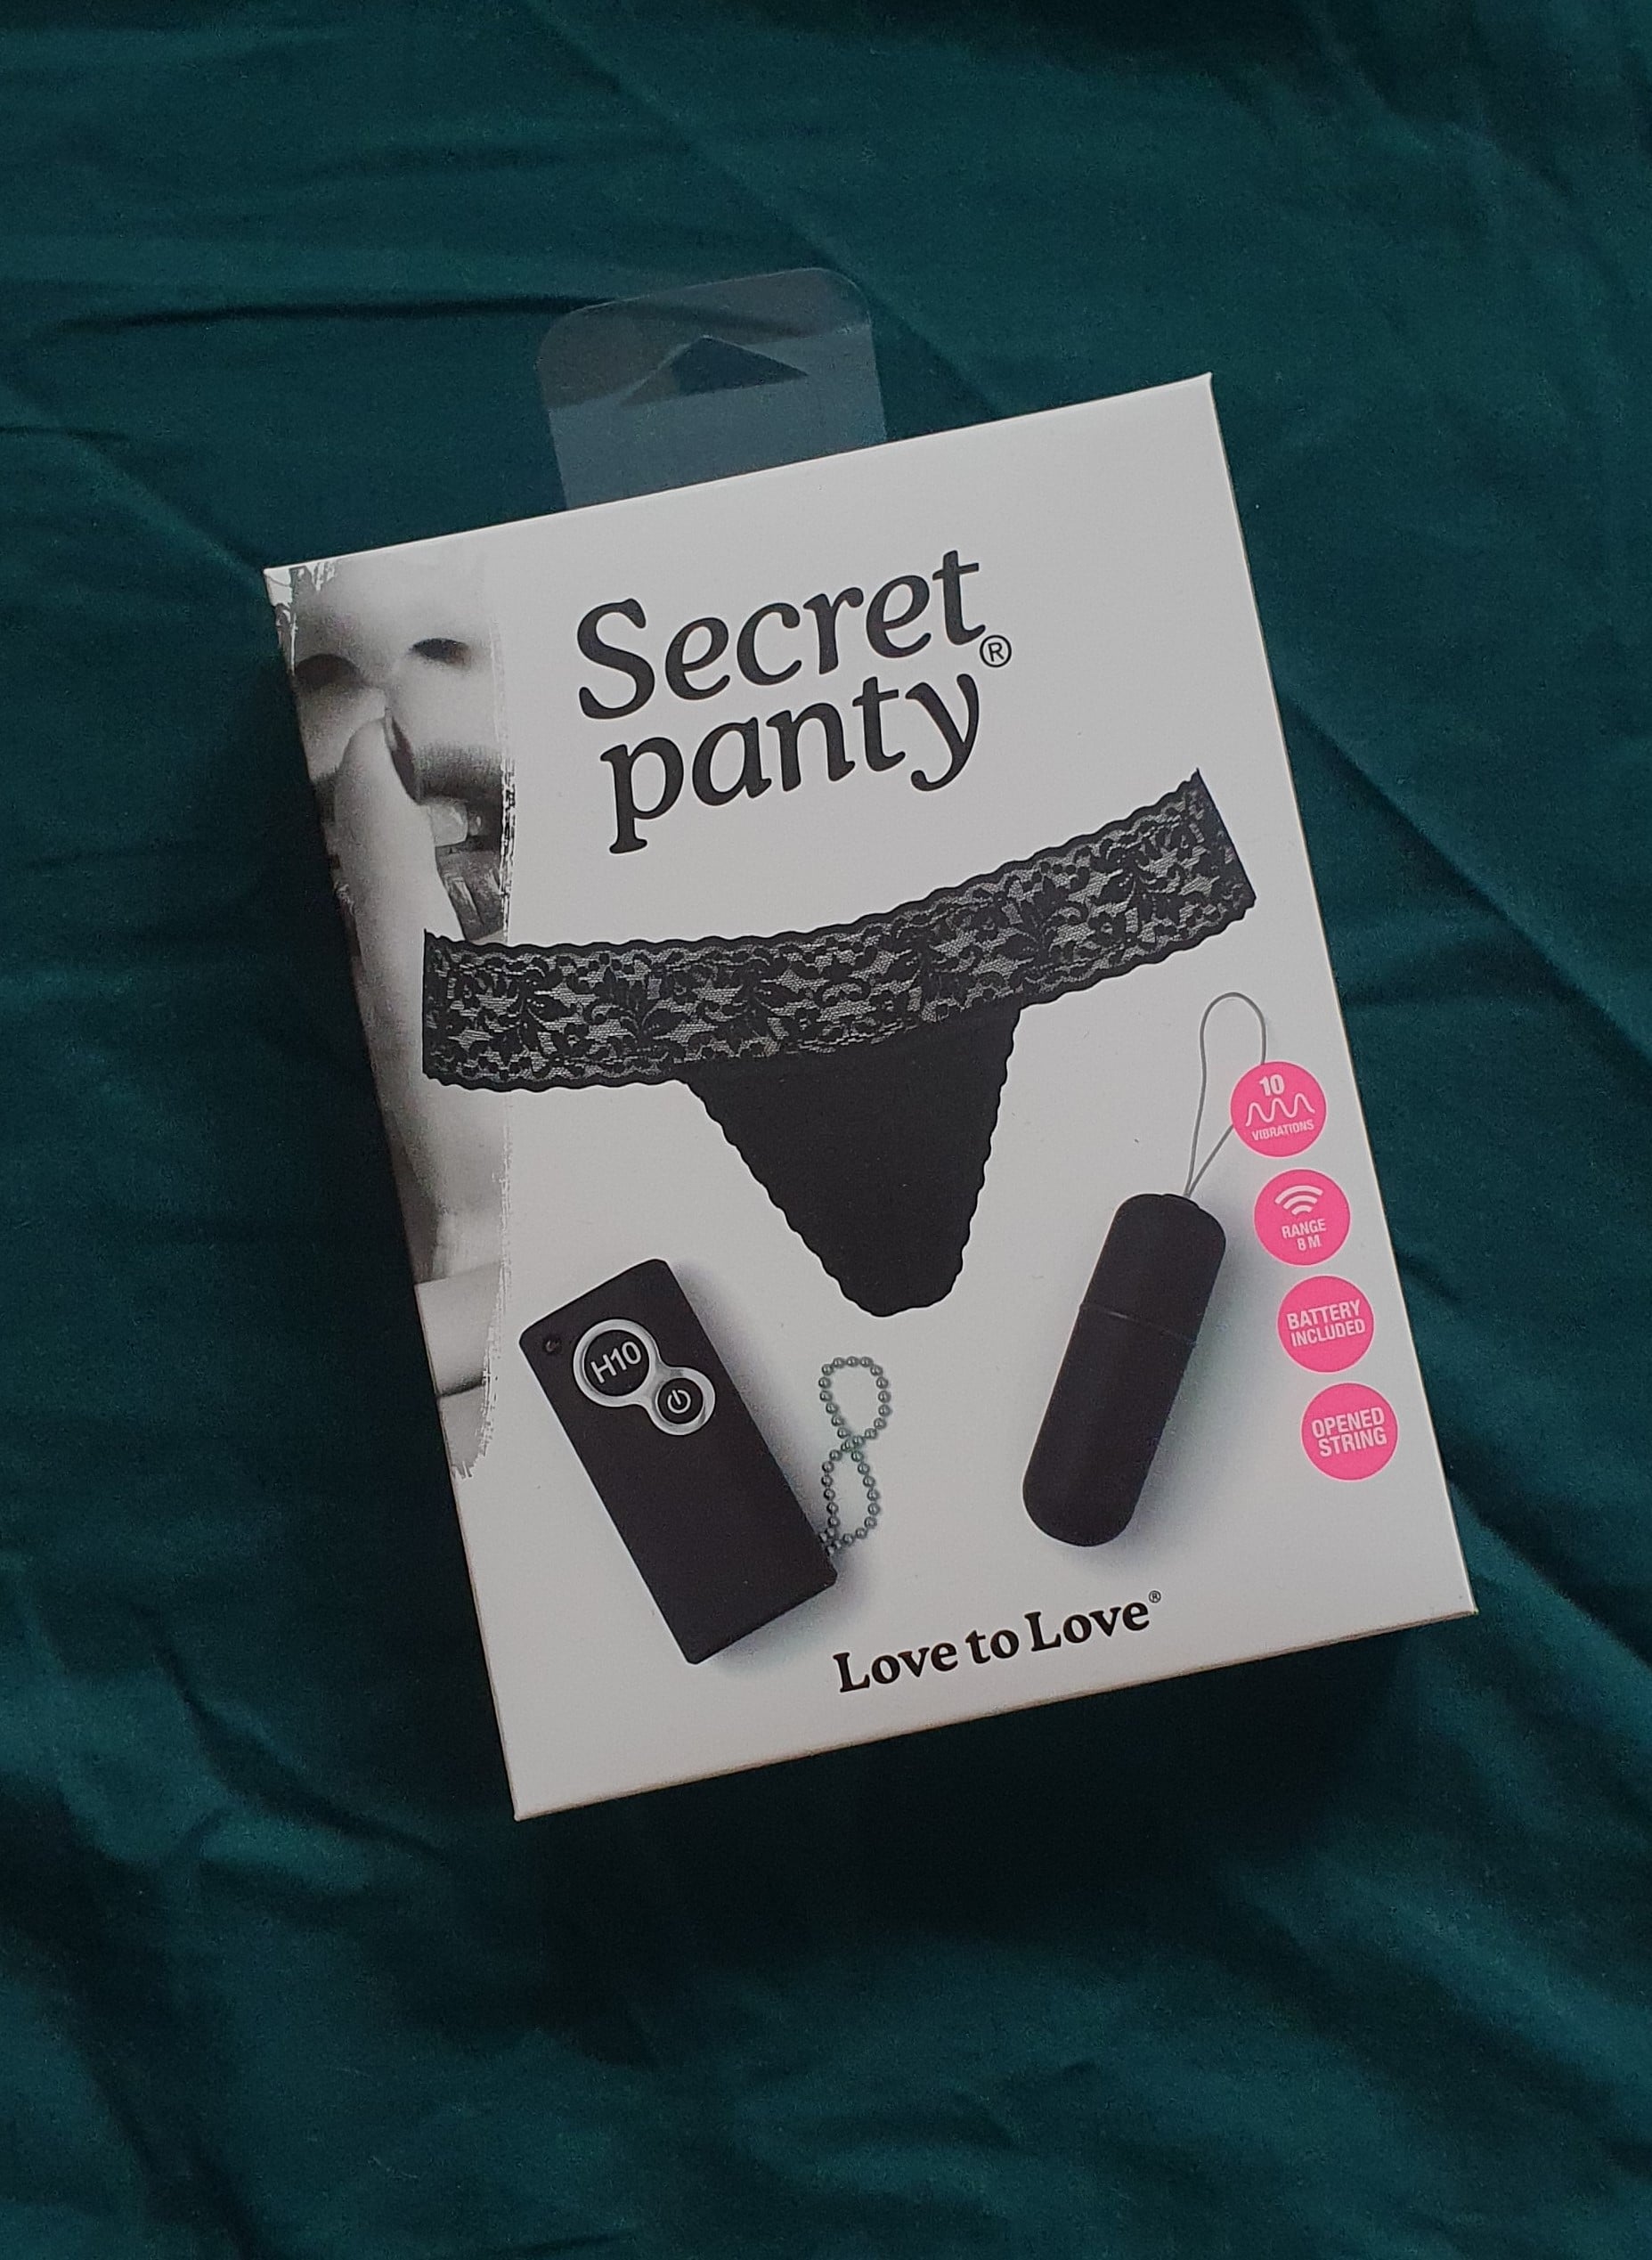 Love to love secret panty